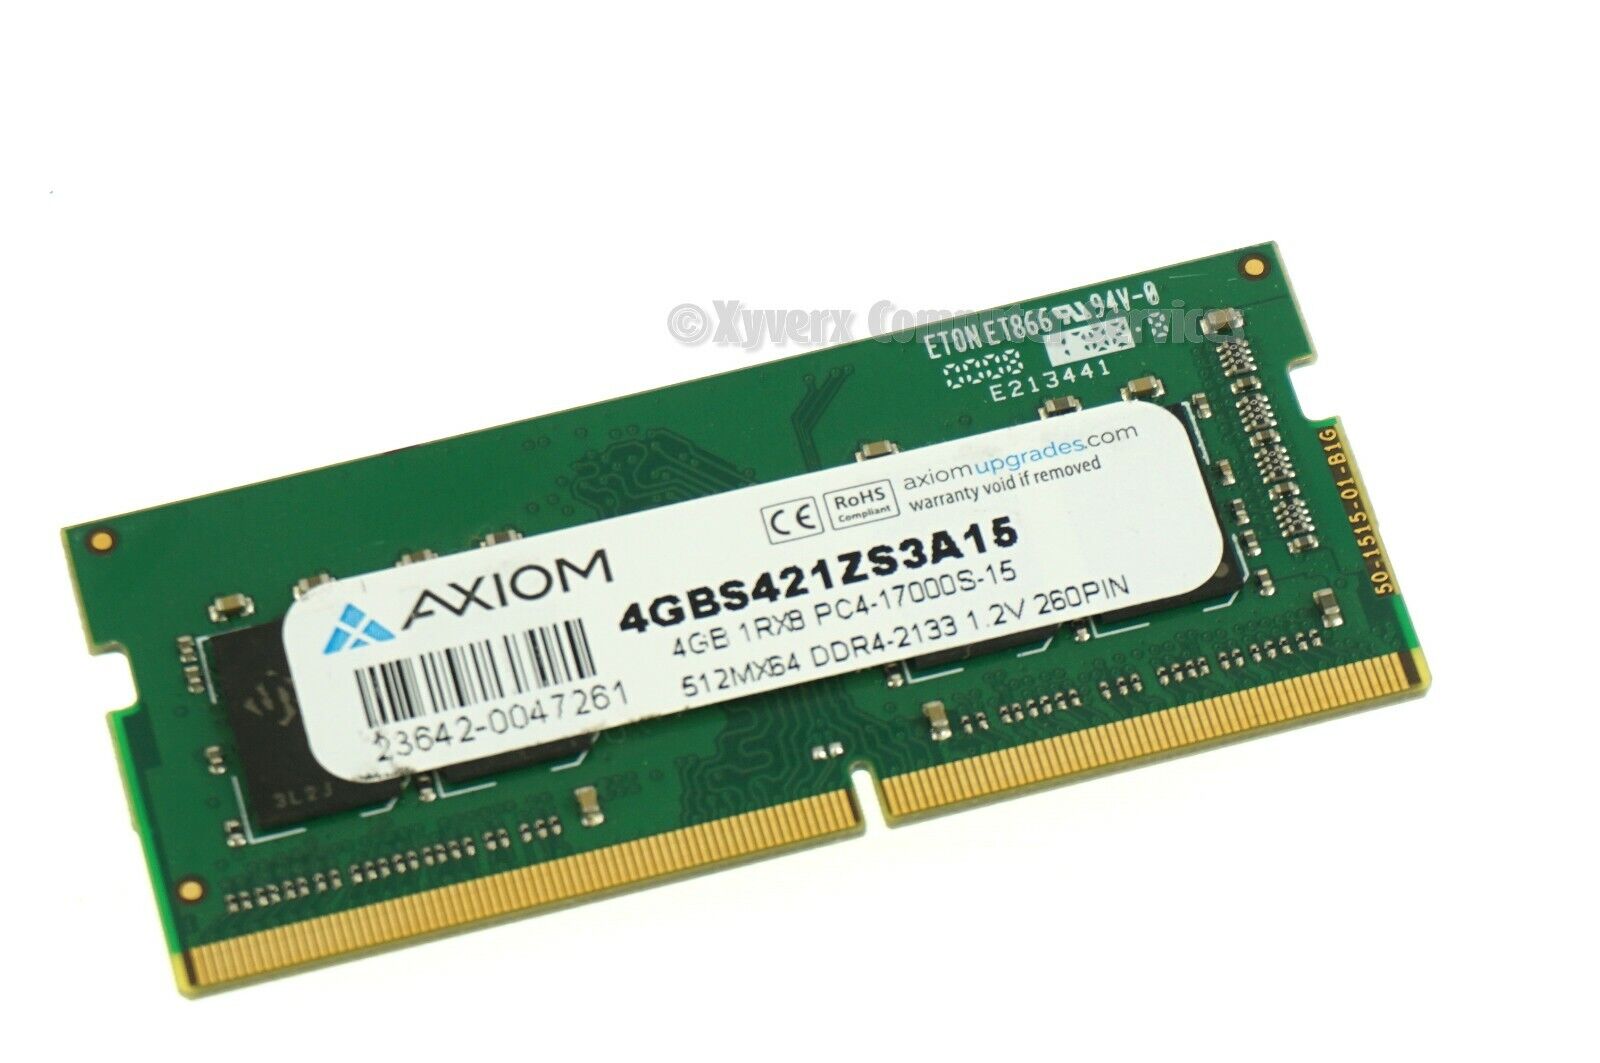 4GBS421ZS3A15 GENUINE AXIOM LAPTOP MEMORY 4GB DDR4 PC4-17000S-15 (CA610)